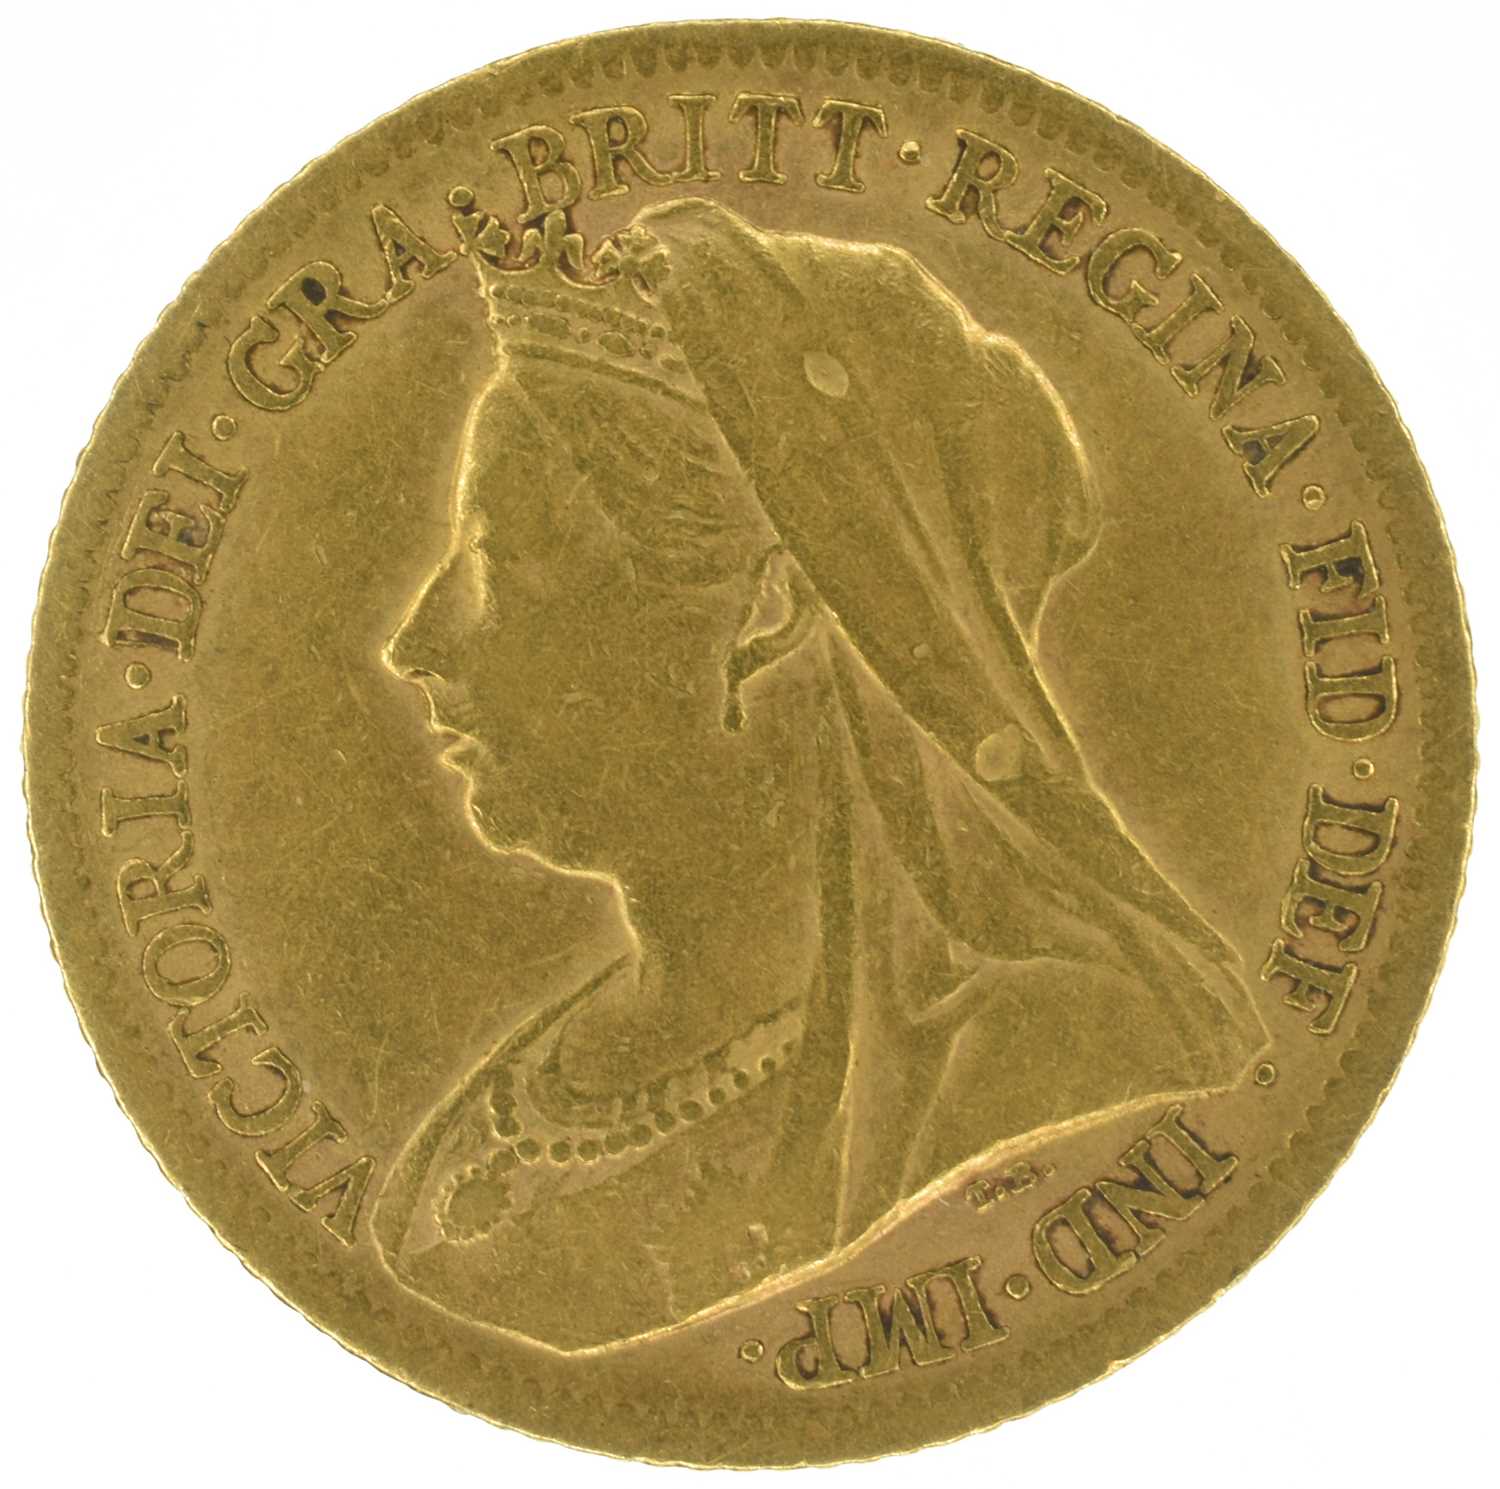 Lot 29 - Queen Victoria, Half-Sovereign, 1900, London Mint.